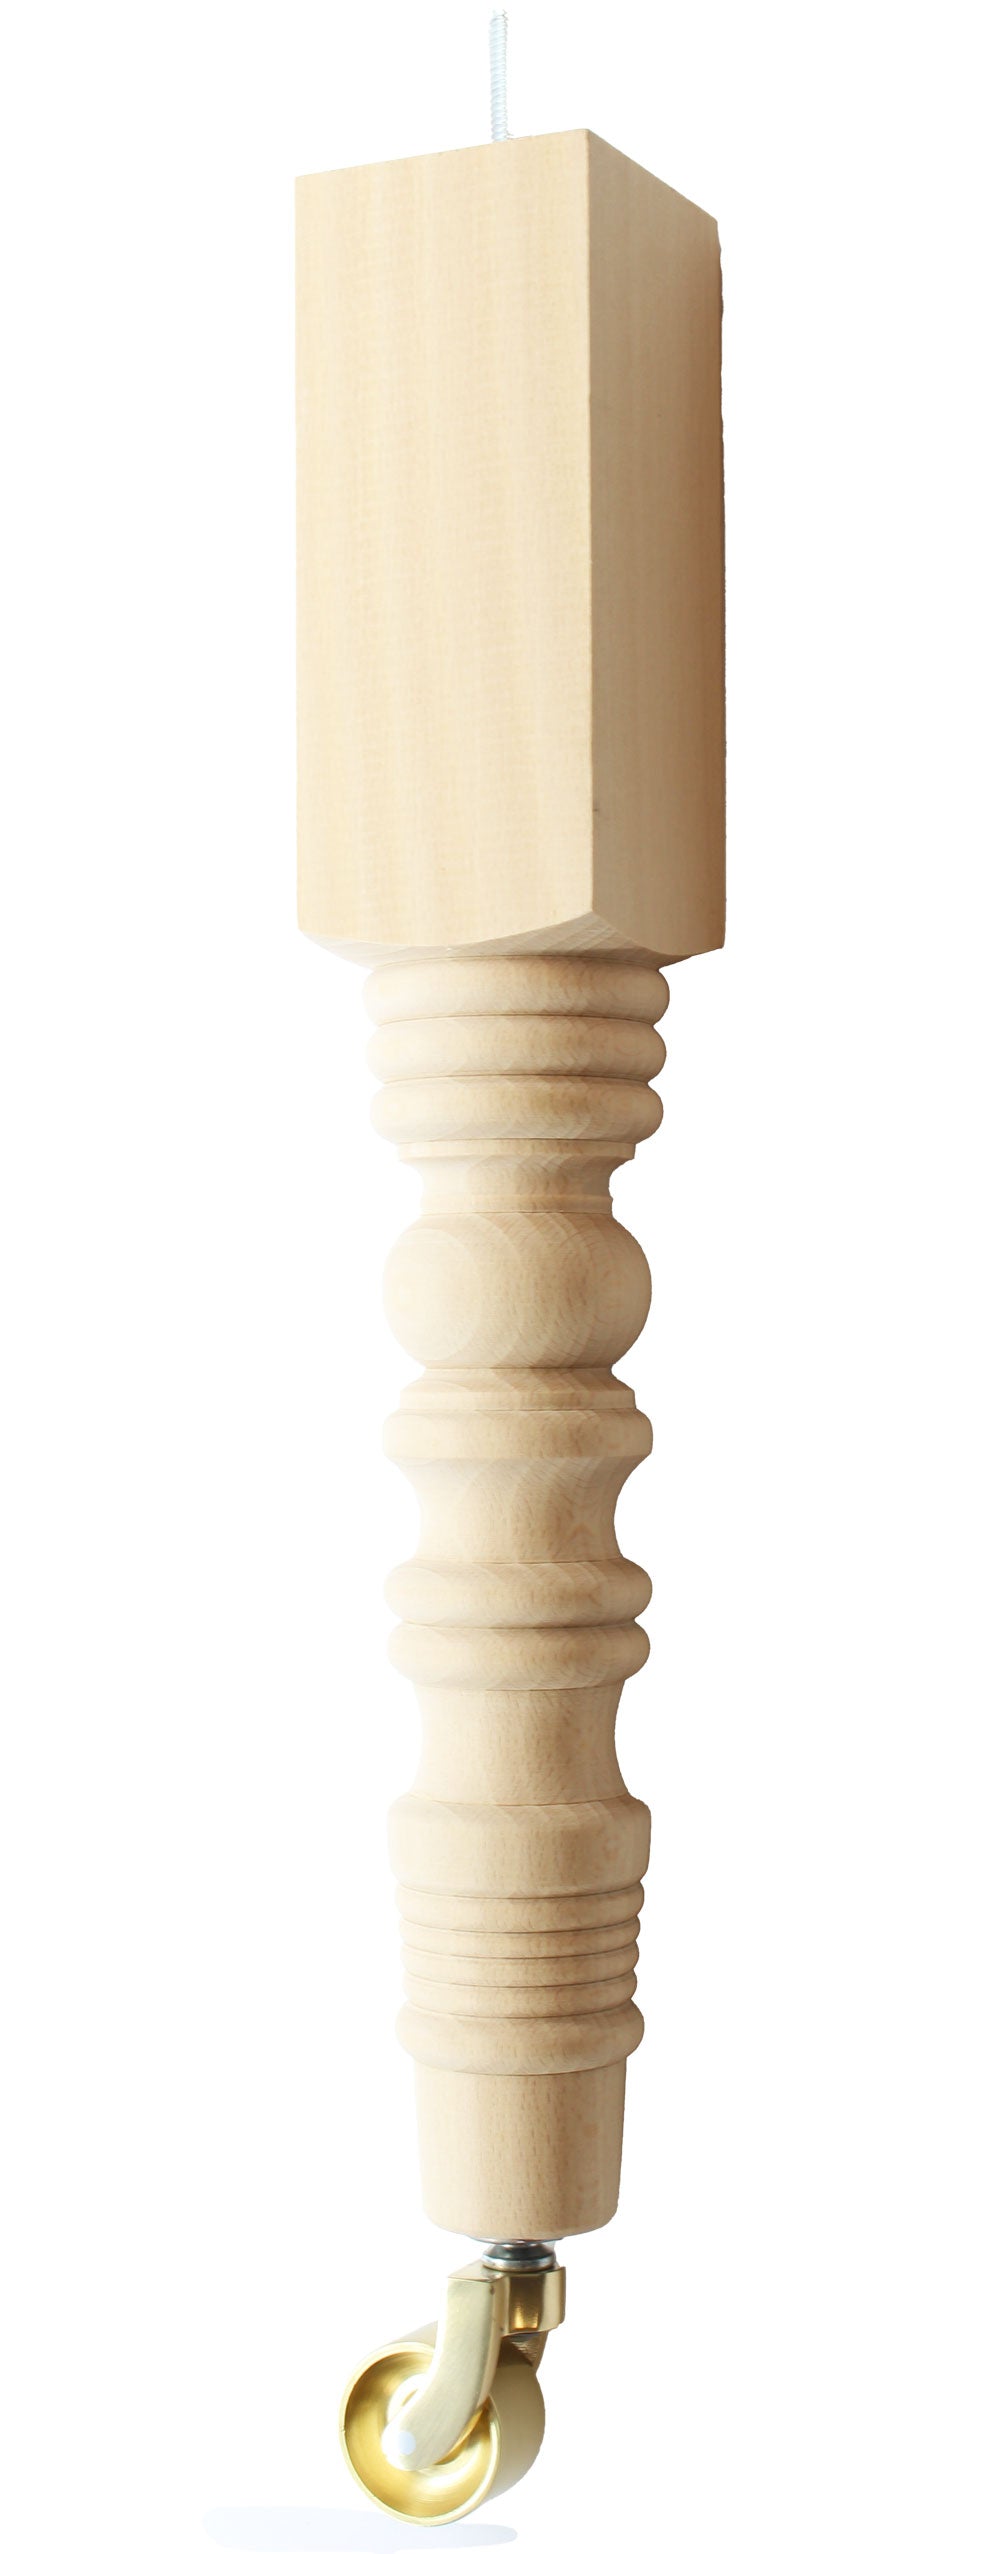 Lagrasse Detailed Wooden Furniture Legs with Grip Neck Castors